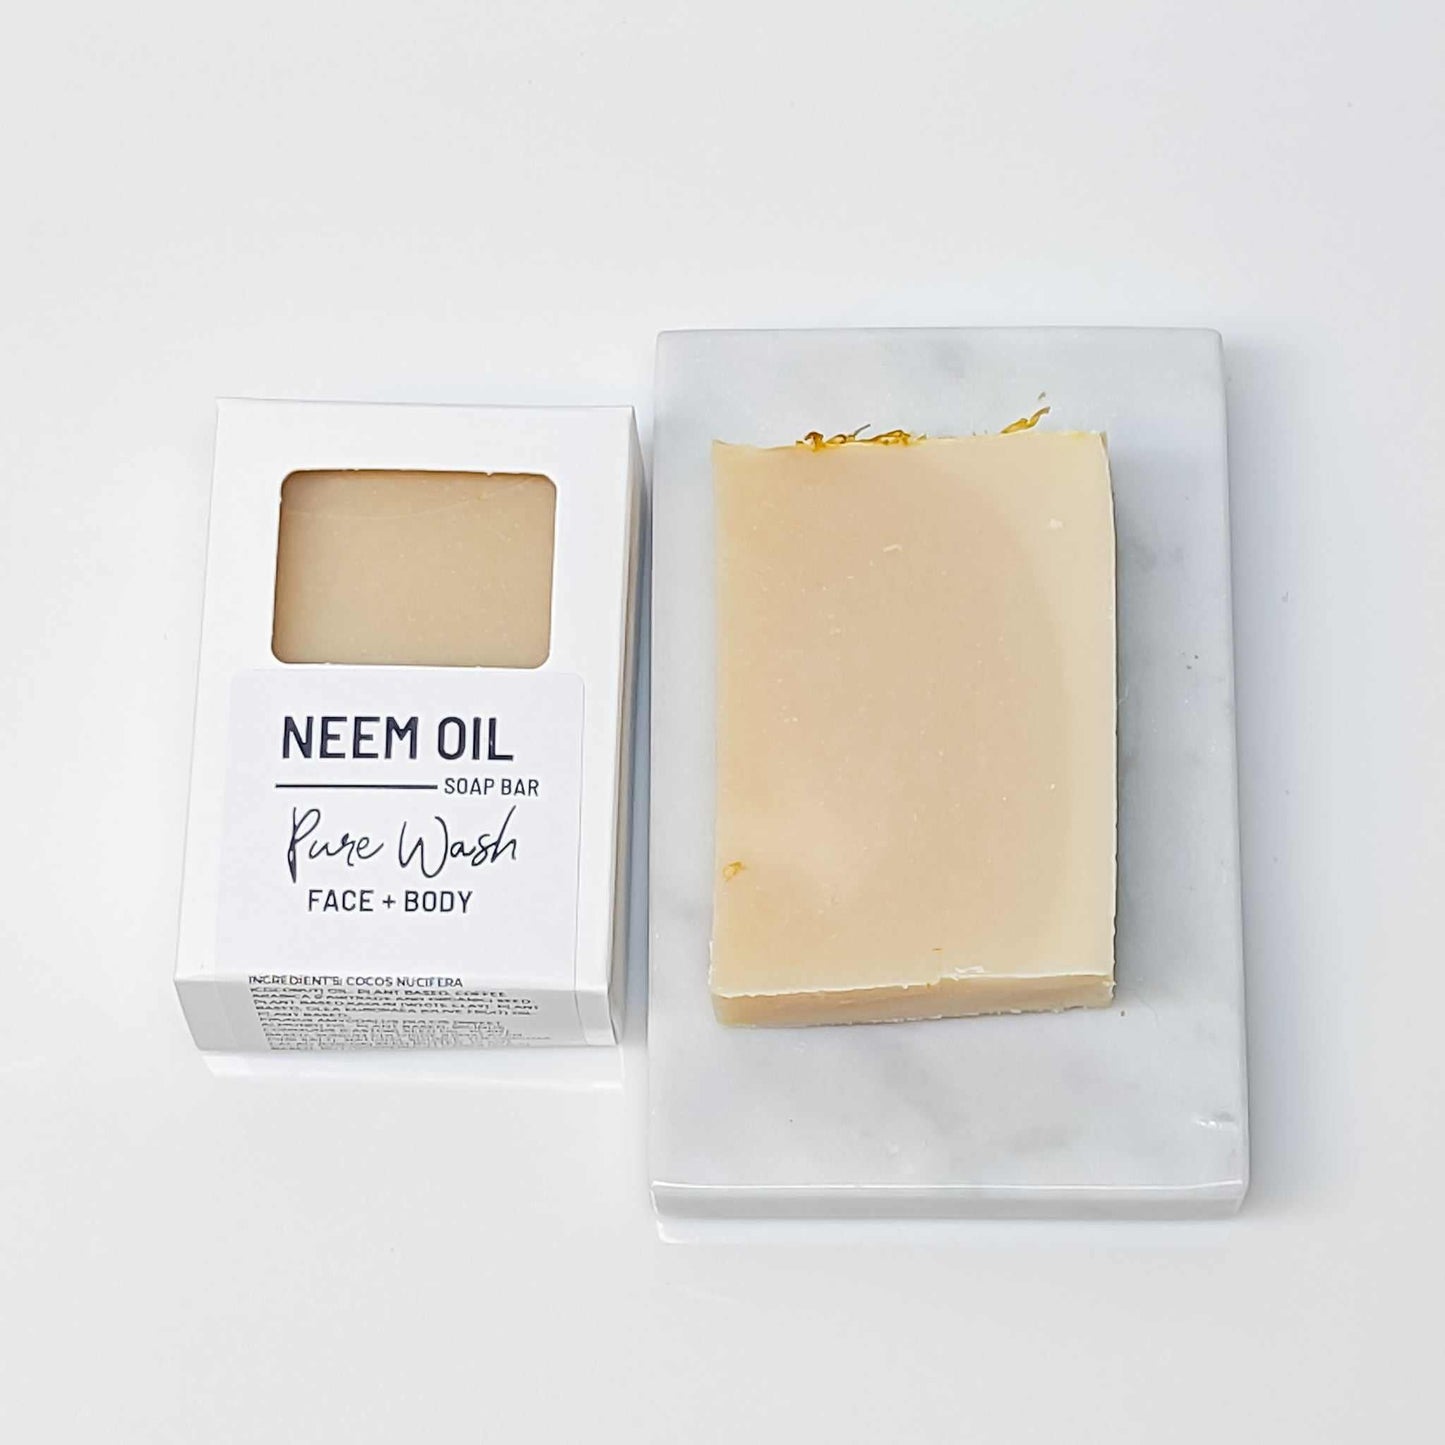 CG Pure Wash presents Neem Oil Soap Bar - Canadian skincare